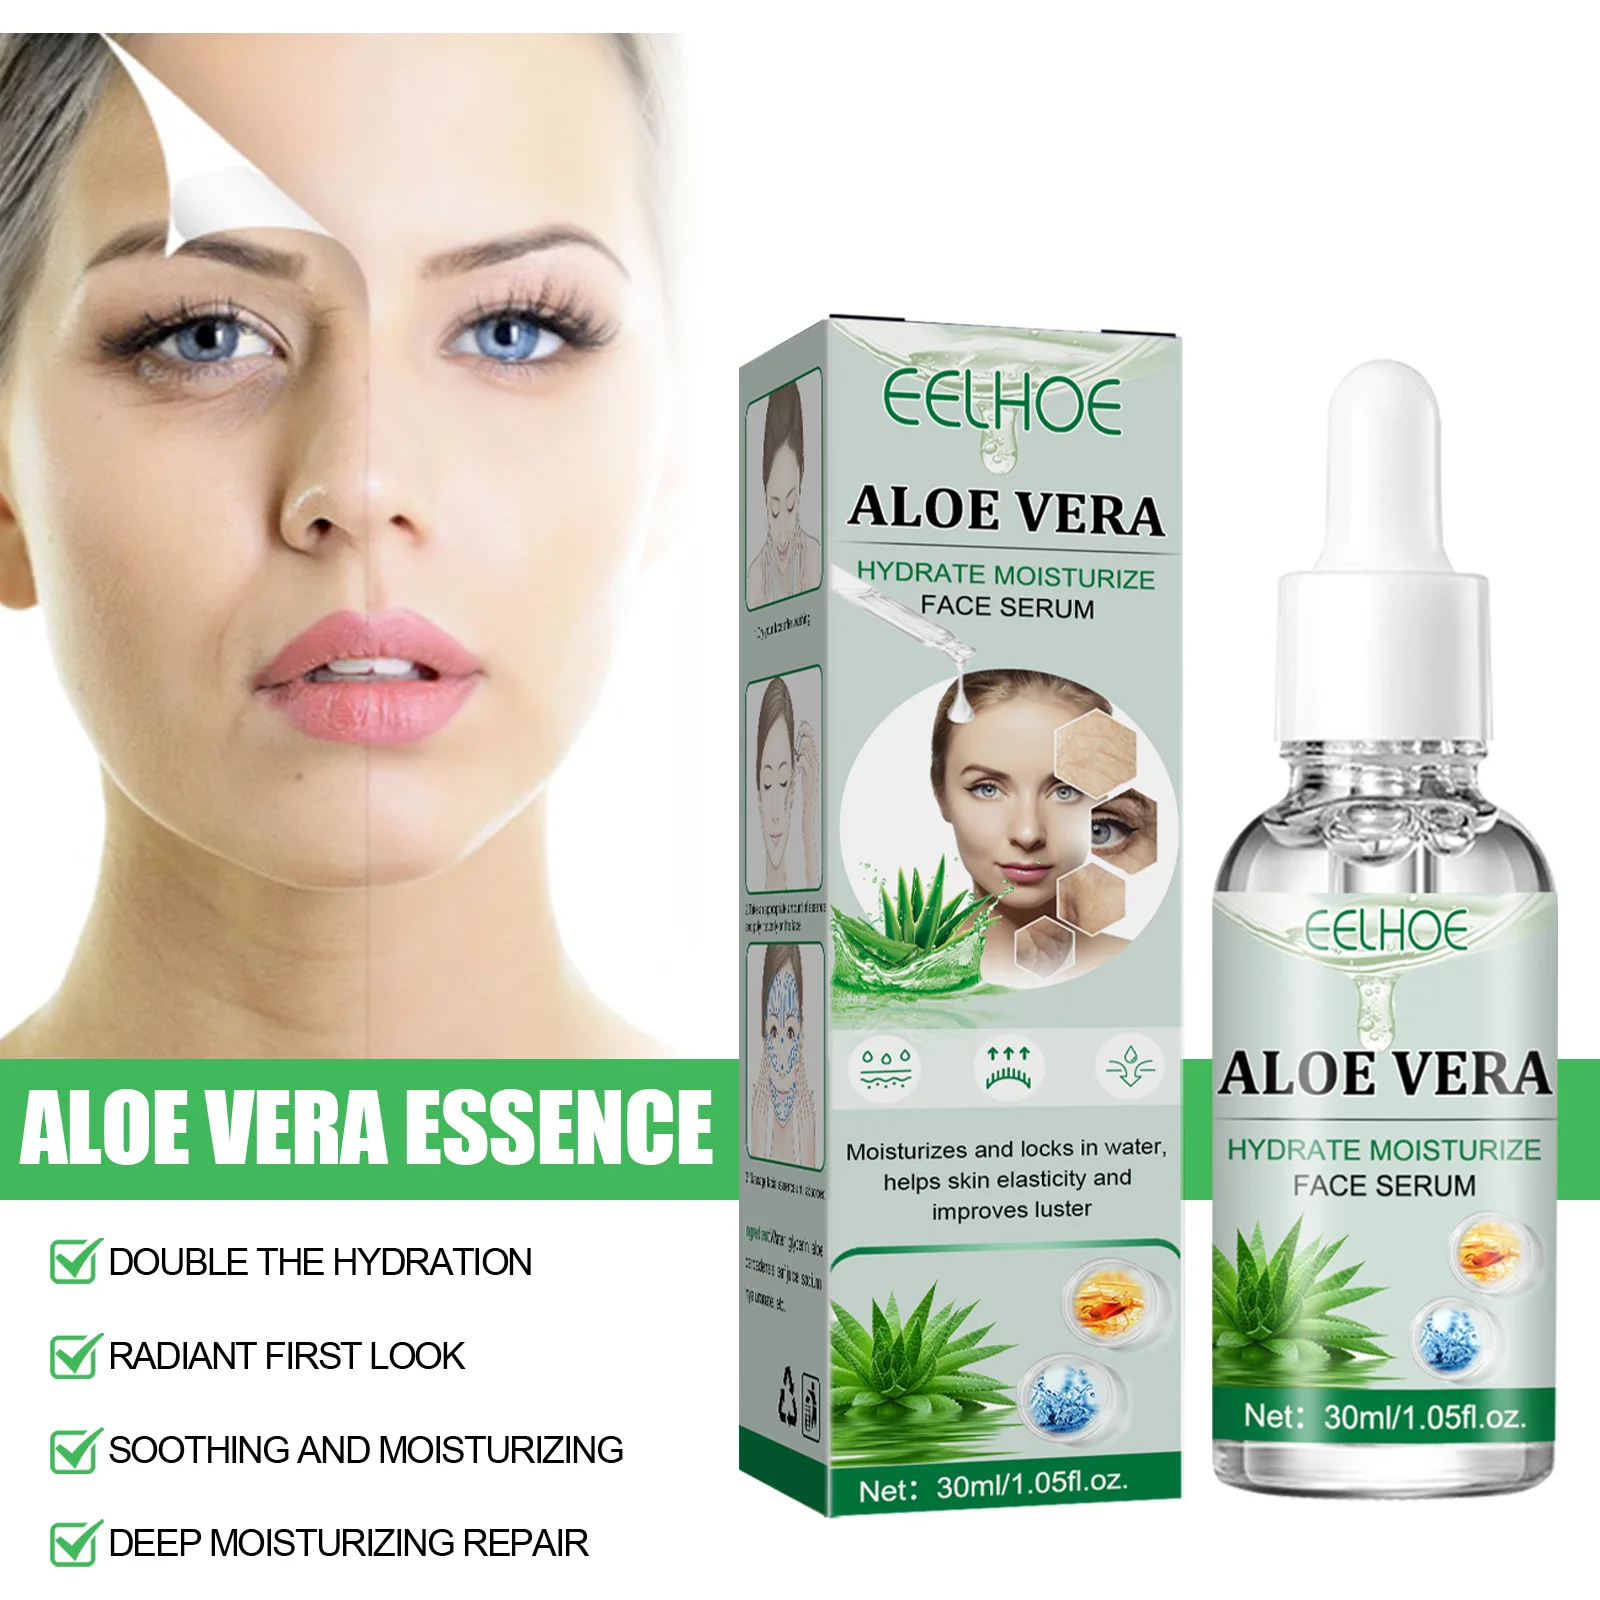 

Aloe Vera Facial Serum Hydrating Moisturizing Lifting Firming Repairing Shrink Pores Face Essence Anti Aging Oil Control 30ml